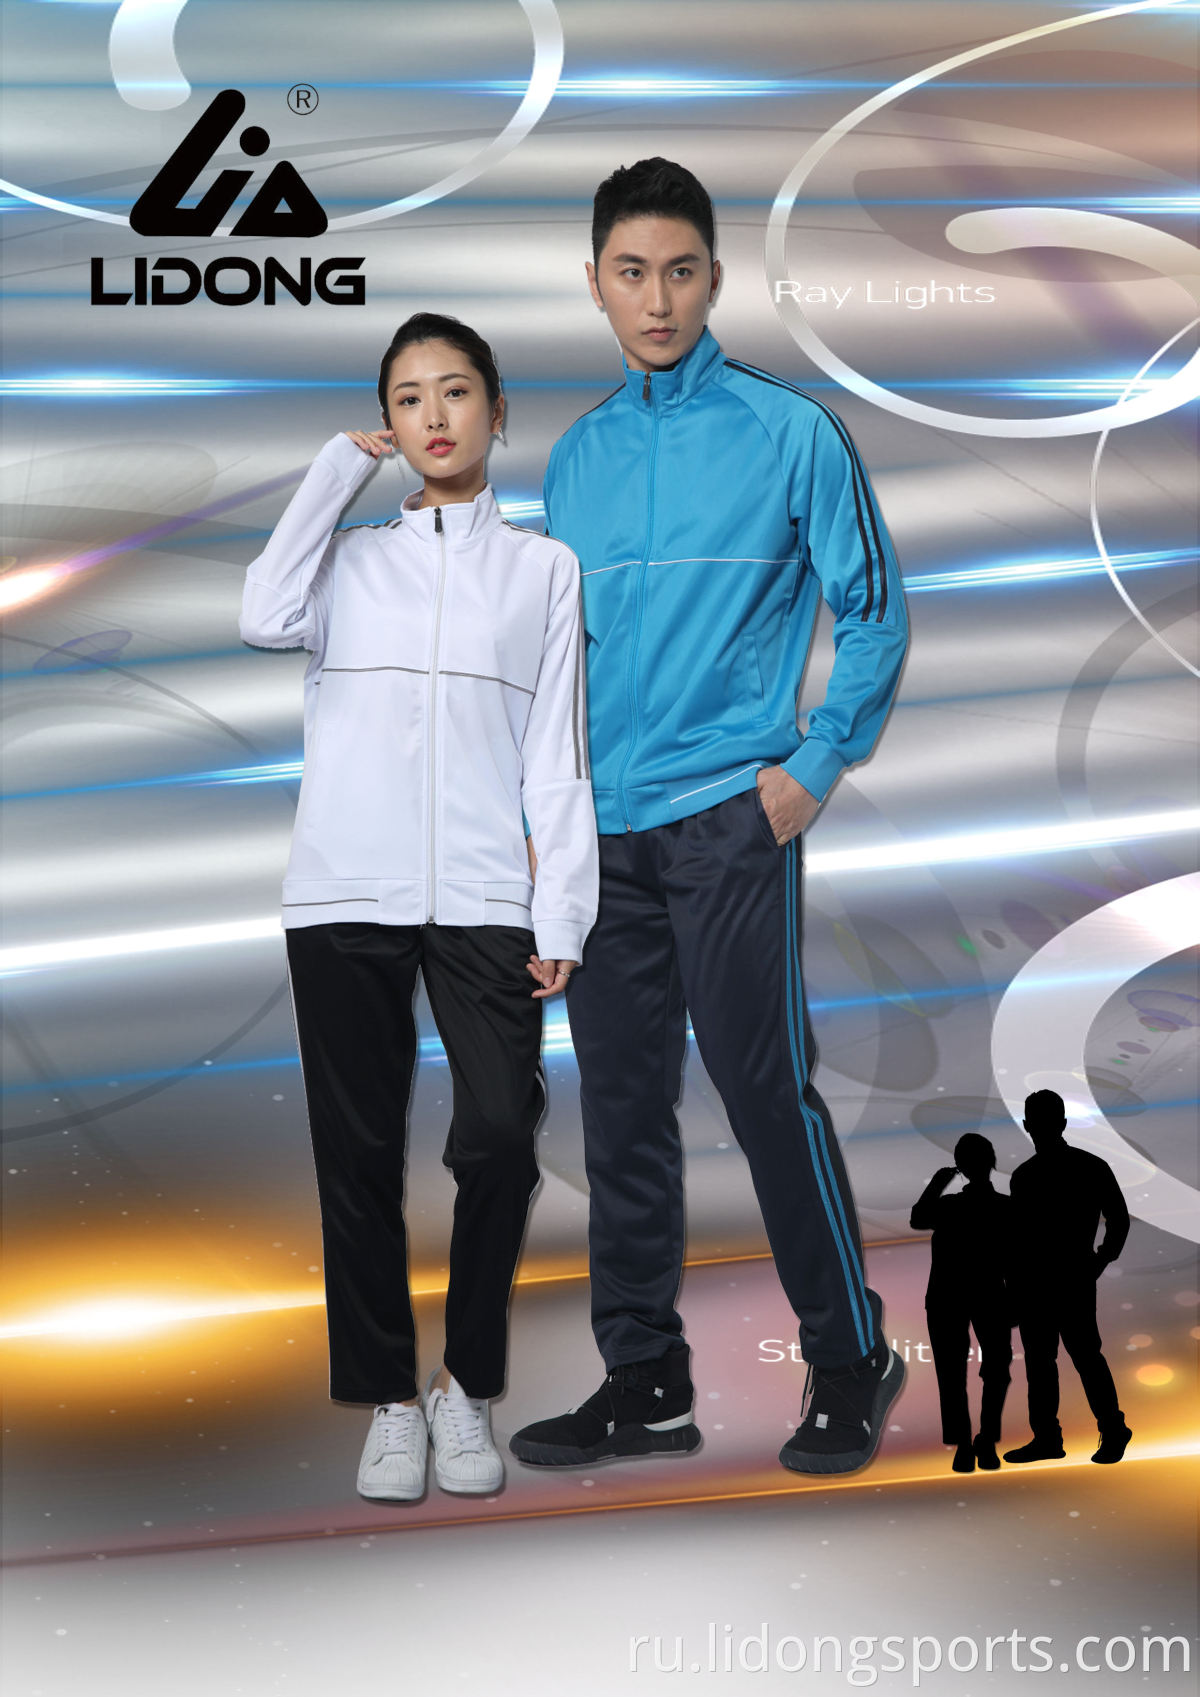 Lidong Soccer Sports Plain Men Men Women Women Track Suit Slim Fit Оптовая футбольная куртка Трека Бег на открытом воздухе спорт